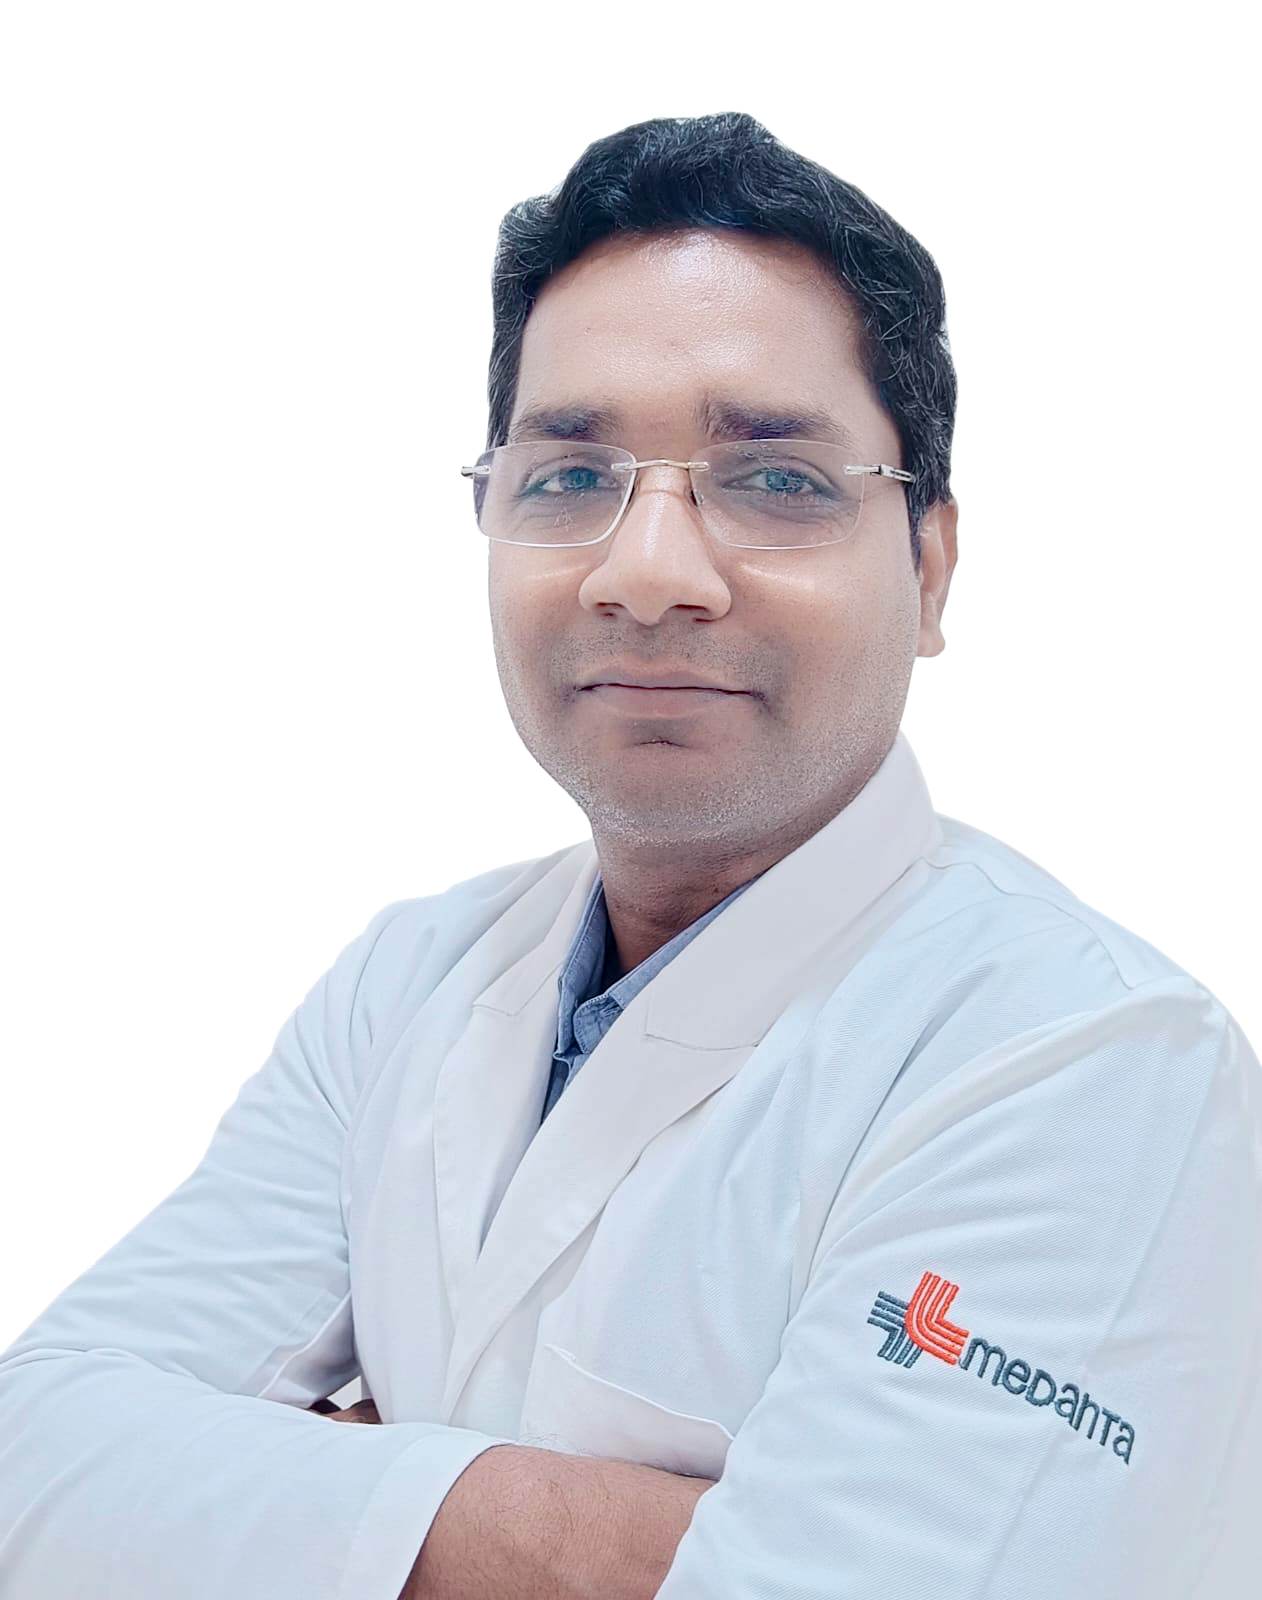 Dr. Amit Kumar